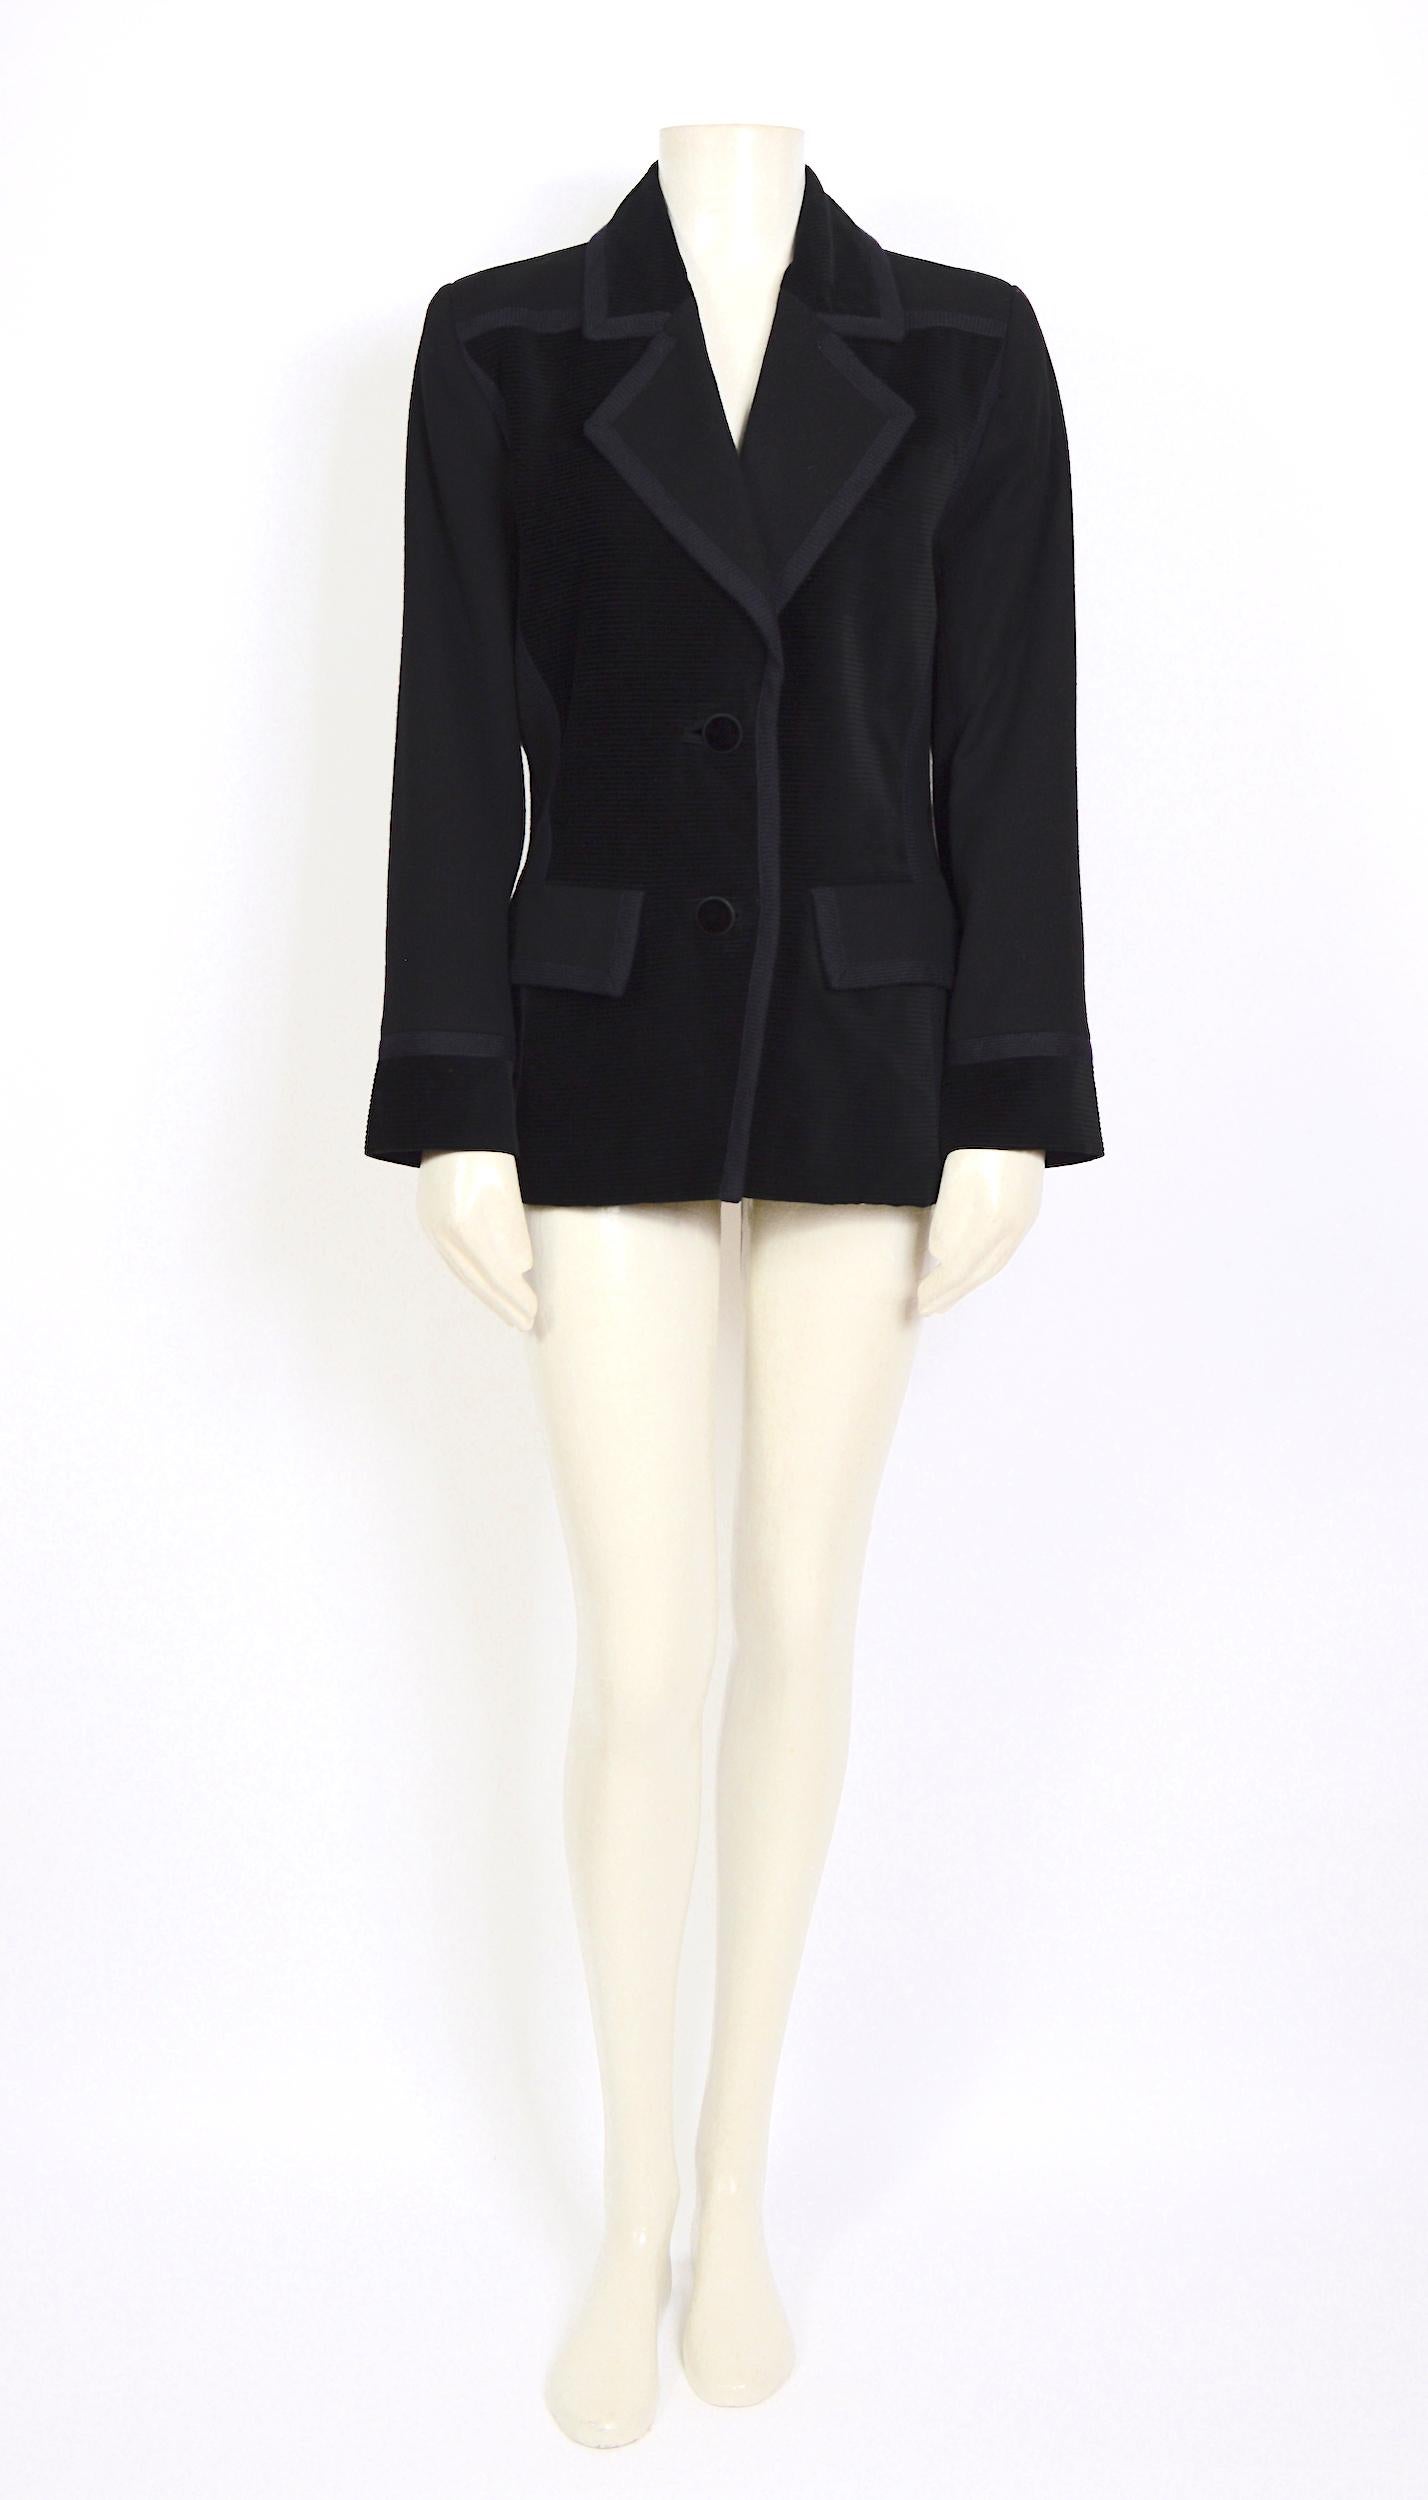 Black Yves Saint Laurent 1980s vintage black wool and velvet jacket